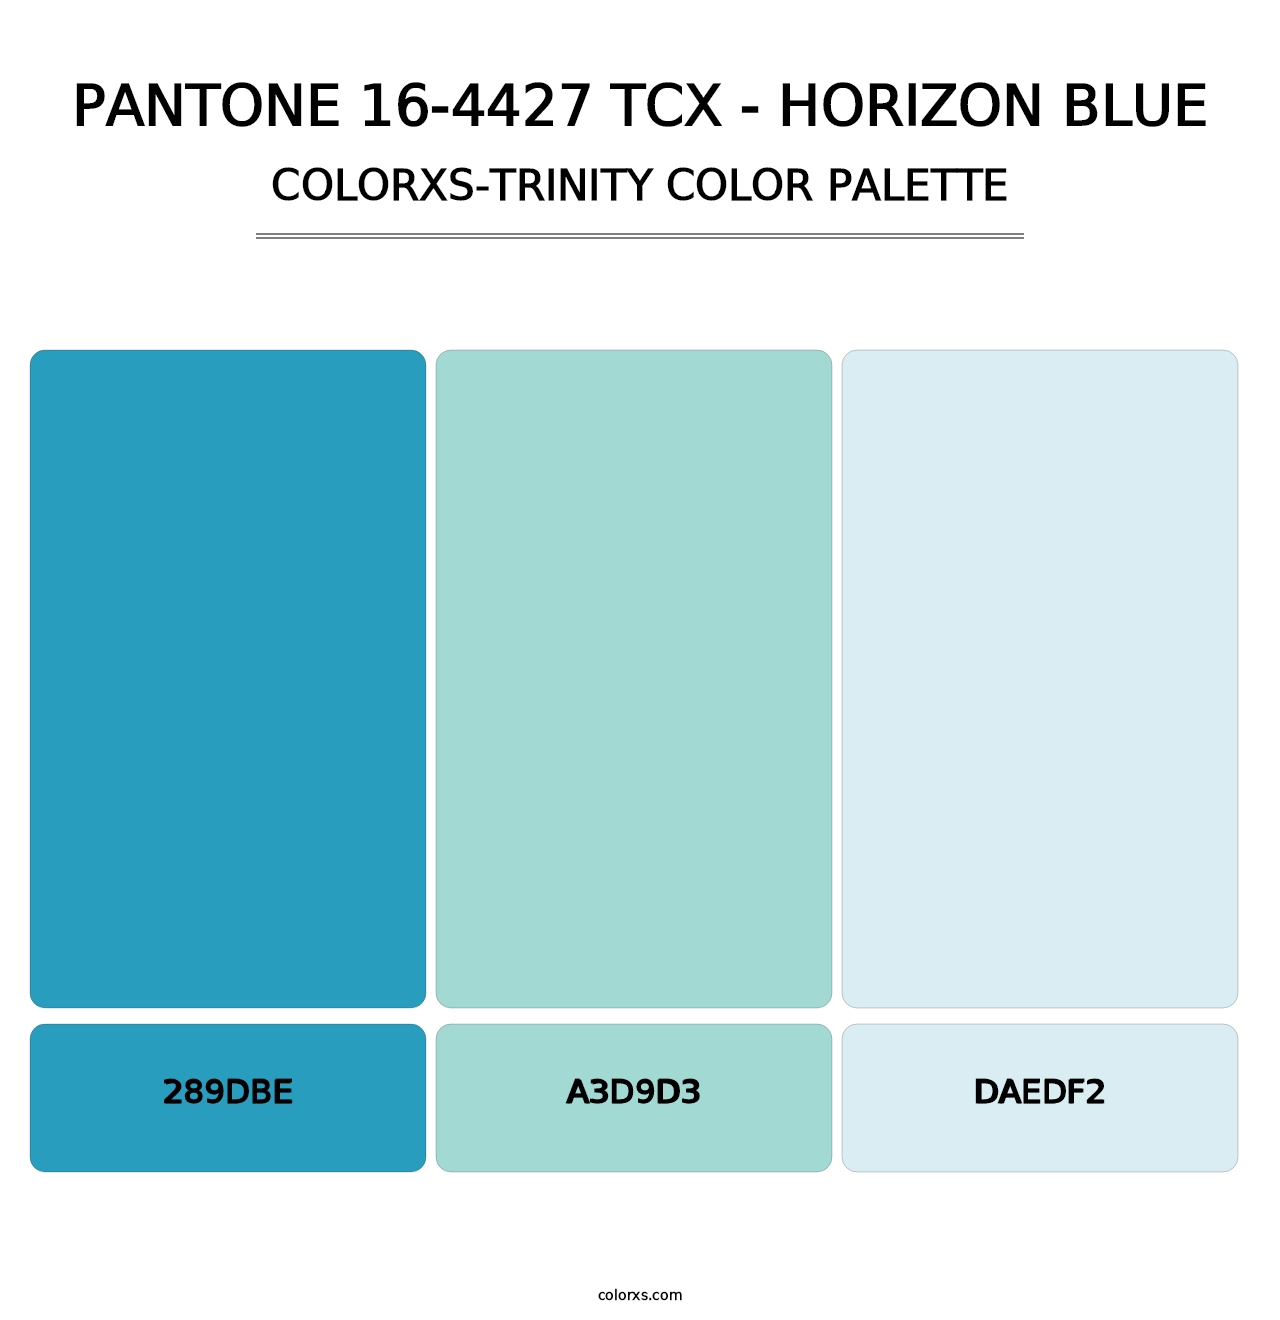 PANTONE 16-4427 TCX - Horizon Blue - Colorxs Trinity Palette